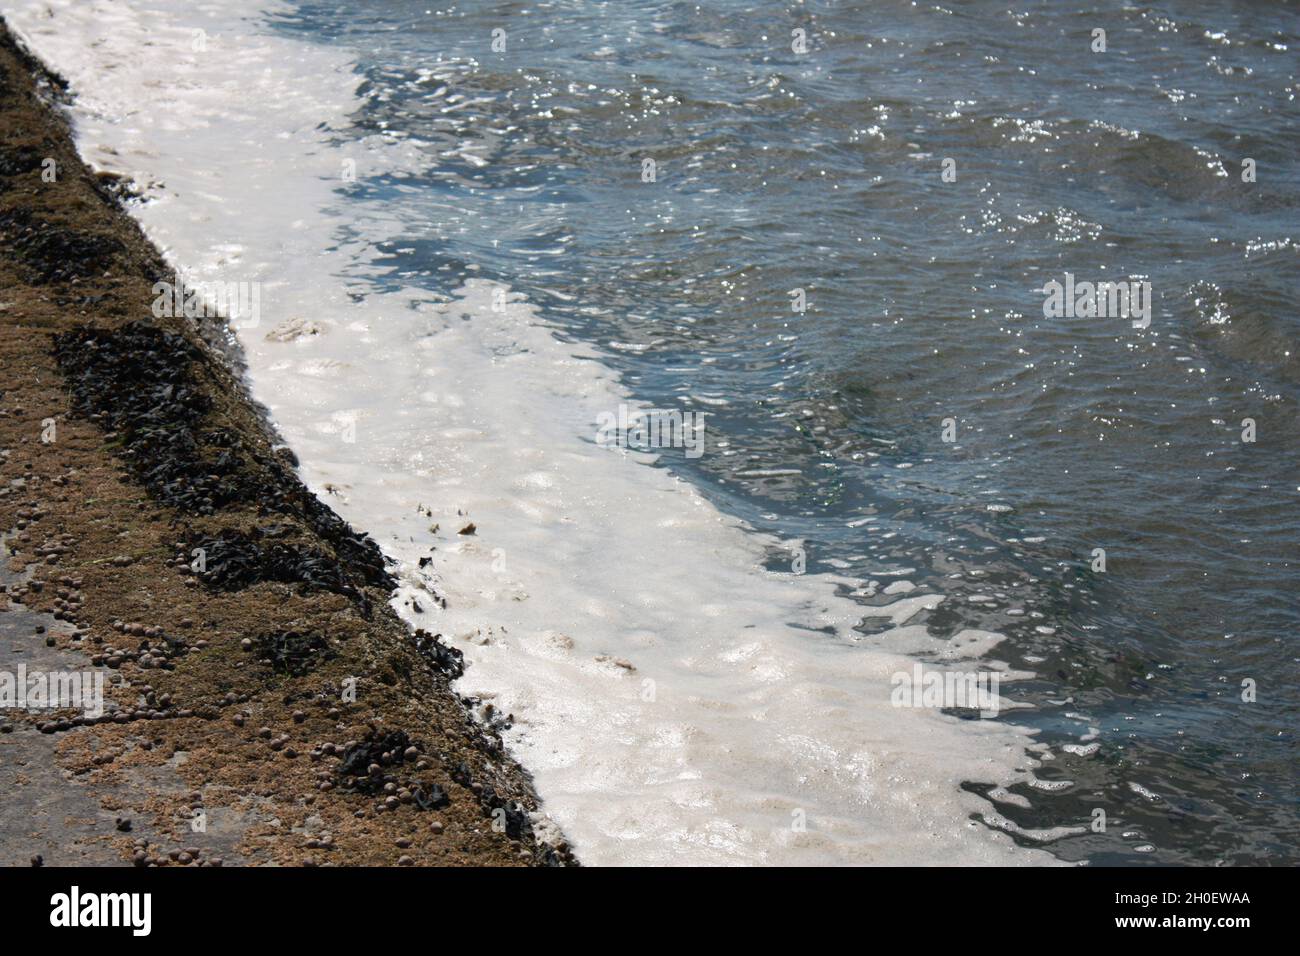 A wave with sea foam crashes upon the coast of Scotland. Stock Photo